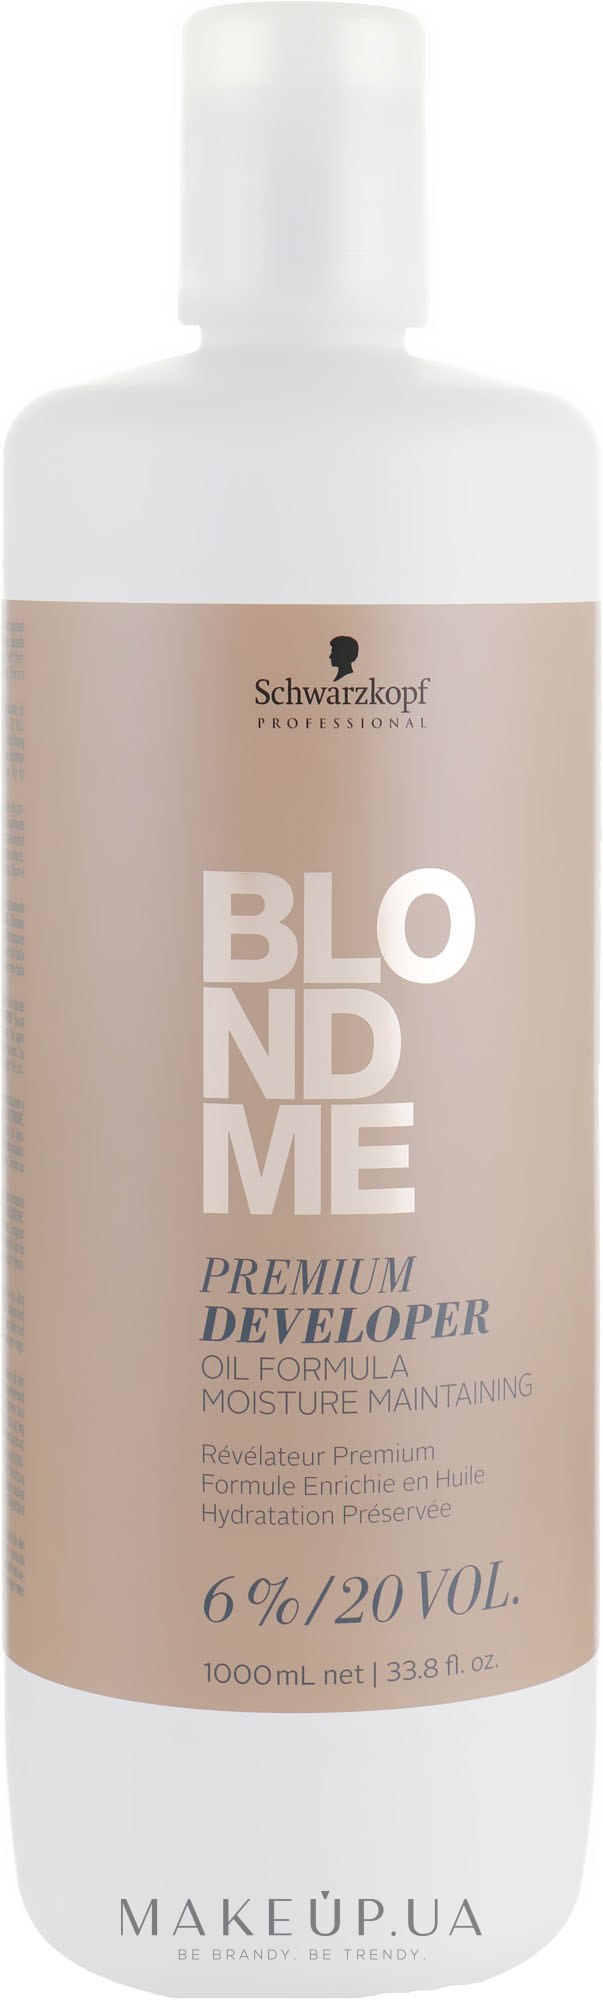 Премиум-Окислитель 6%, 20 Vol. - Schwarzkopf Professional Blondme Premium Developer 6% — фото 1000ml